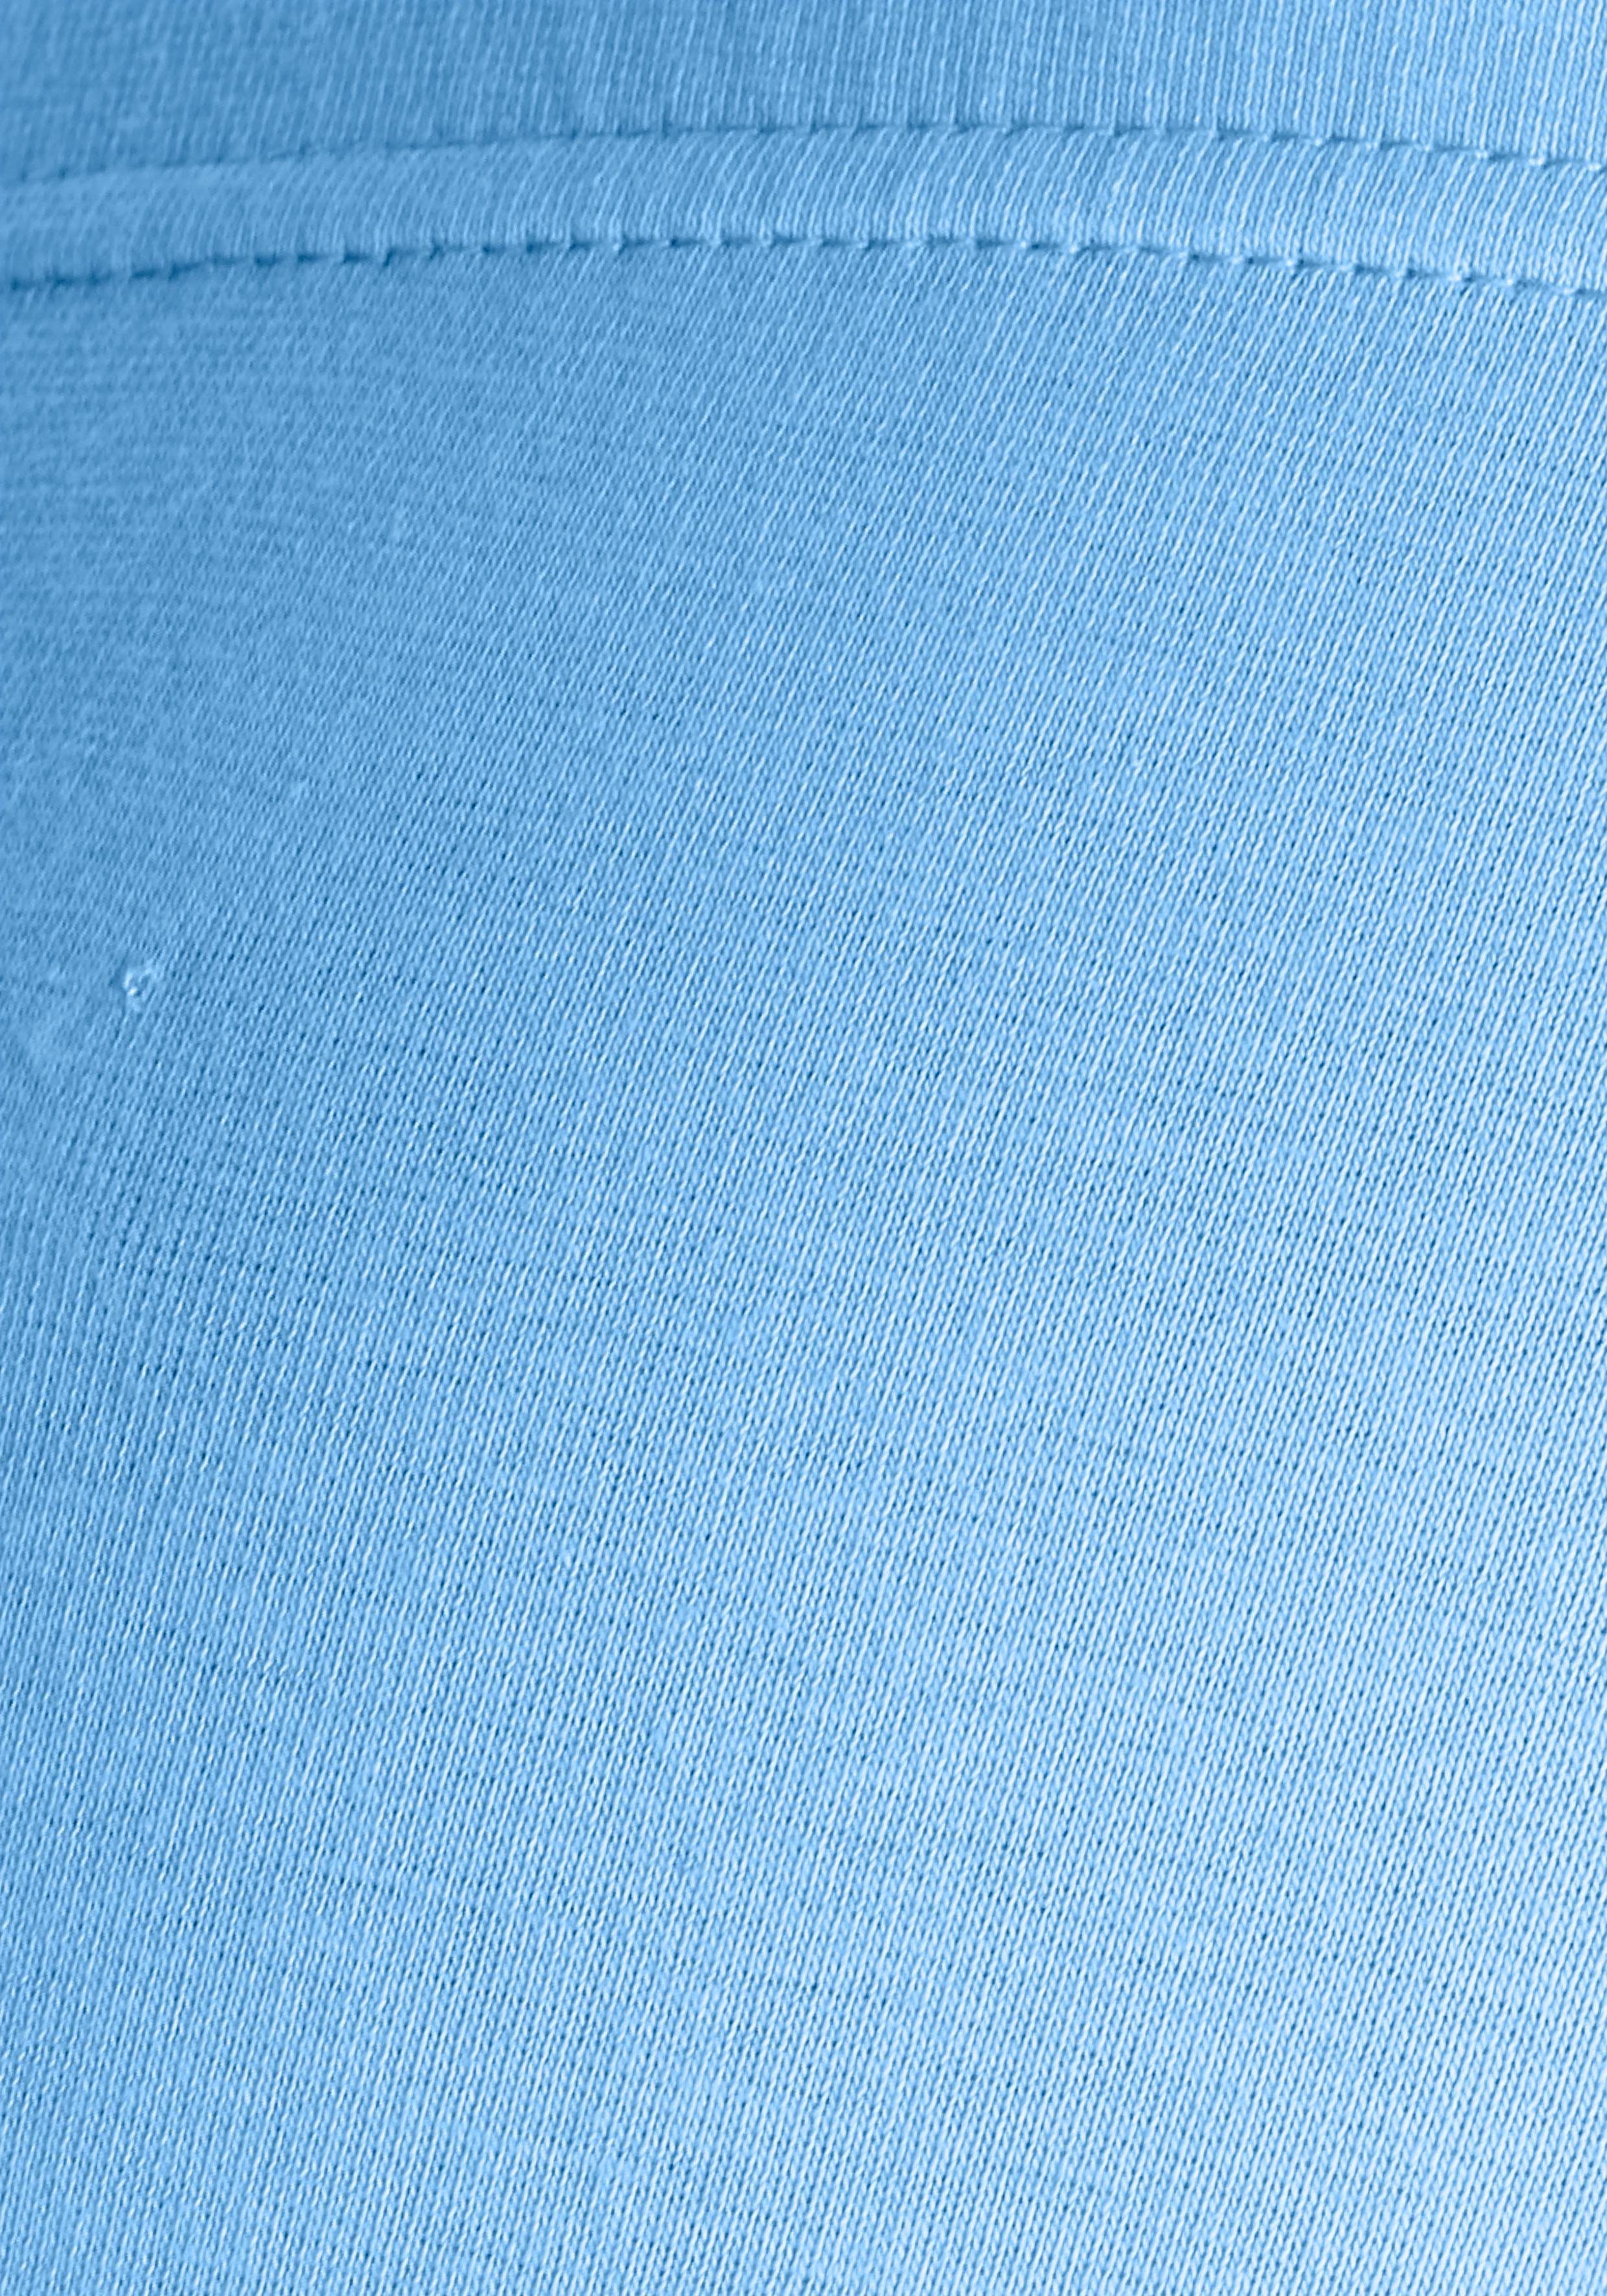 H.I.S Minislip (Packung, khaki, Unifarben marine, weiß schwarz, blau, 10-St) in grau-meliert, rot